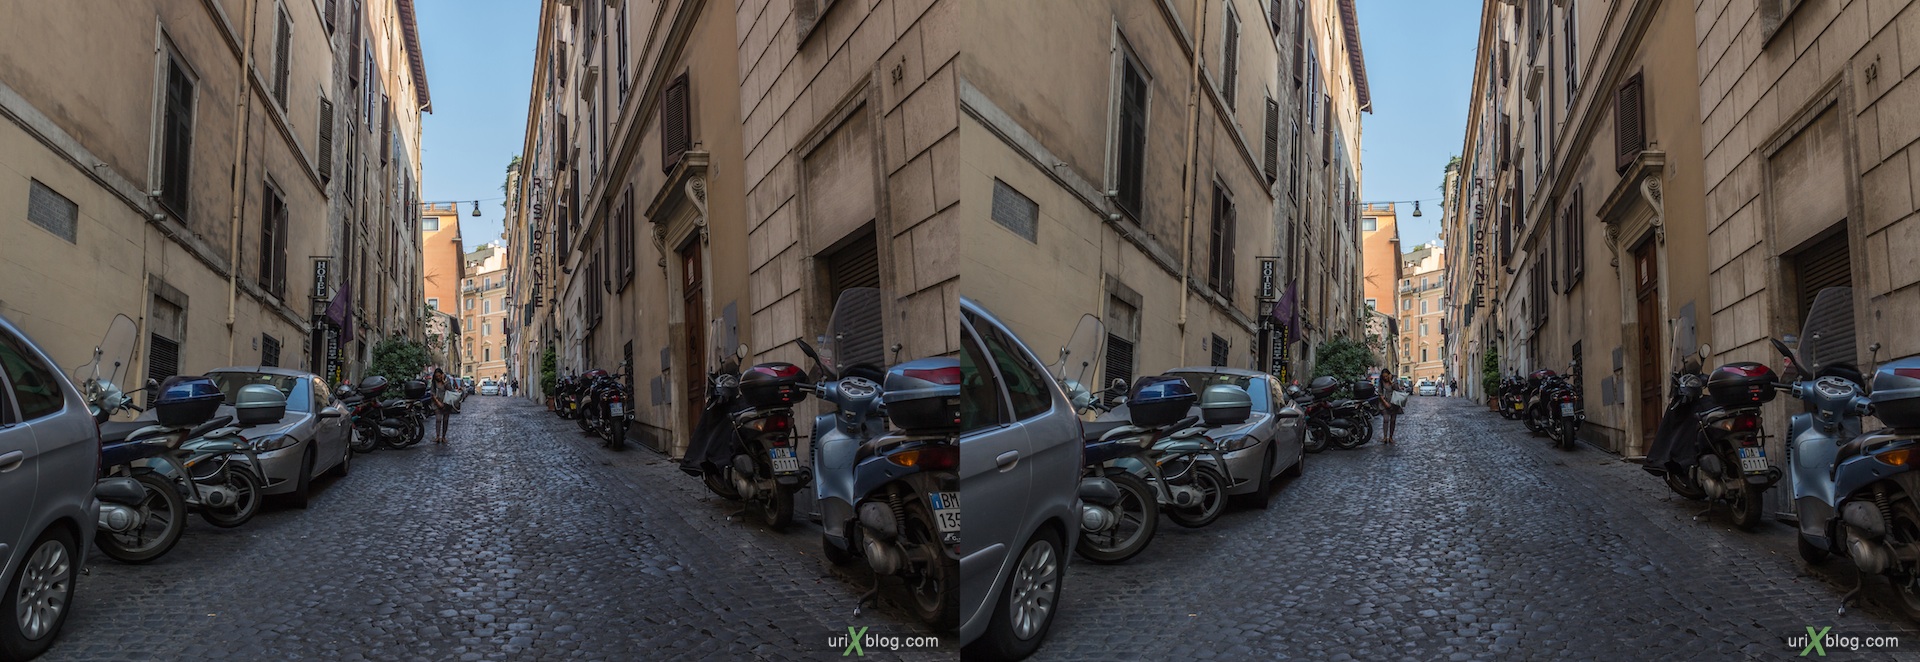 2012, Zuchelli street, Rome, Italy, 3D, stereo pair, cross-eyed, crossview, cross view stereo pair